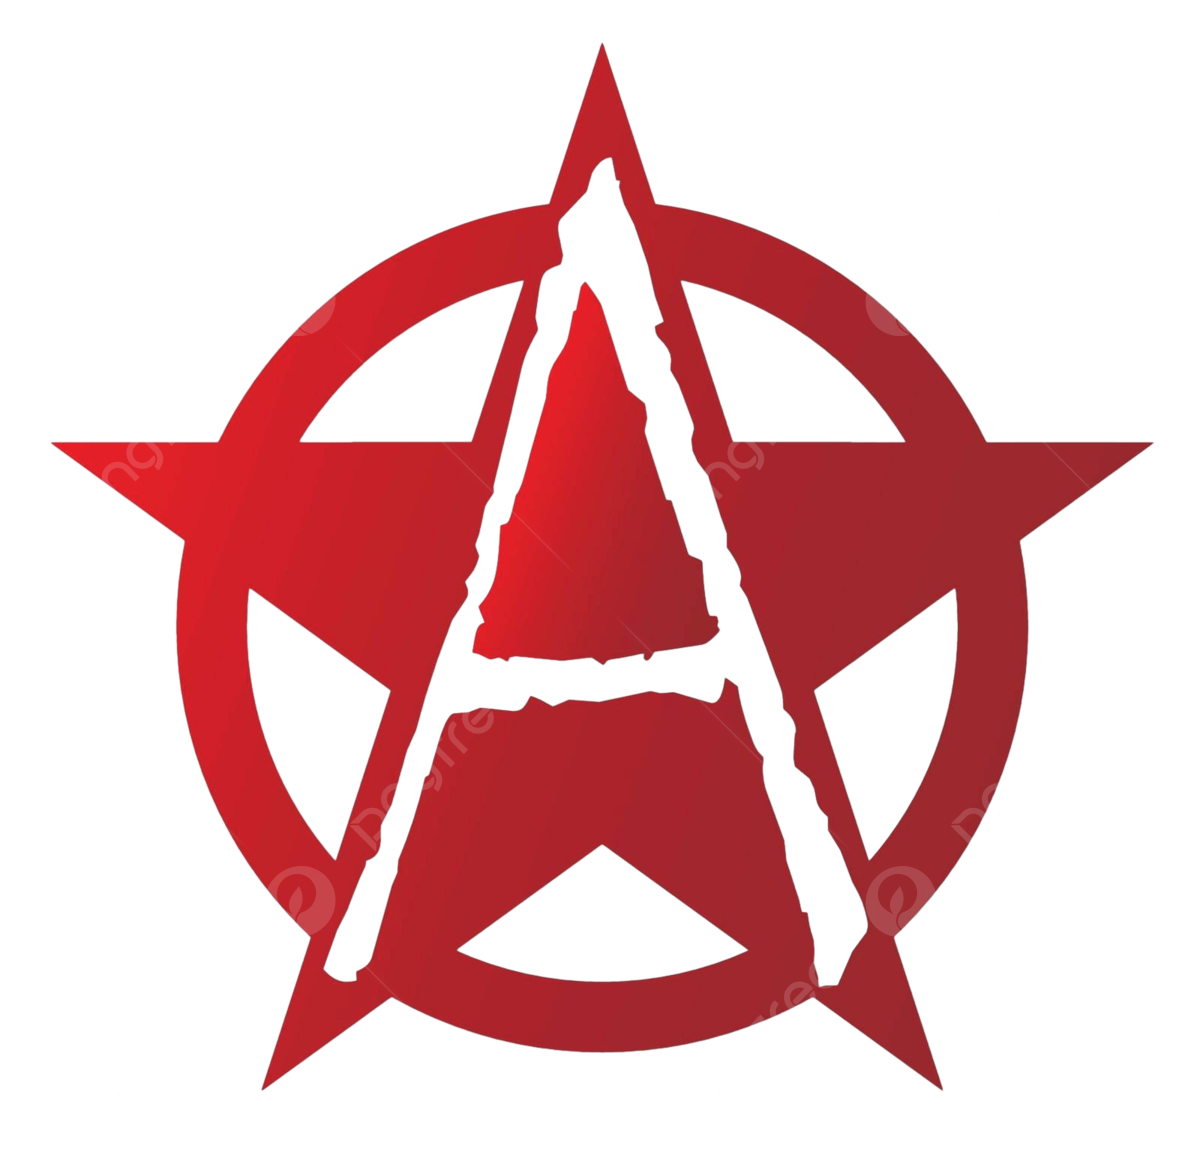 Anarchy Logo PNG Free Image